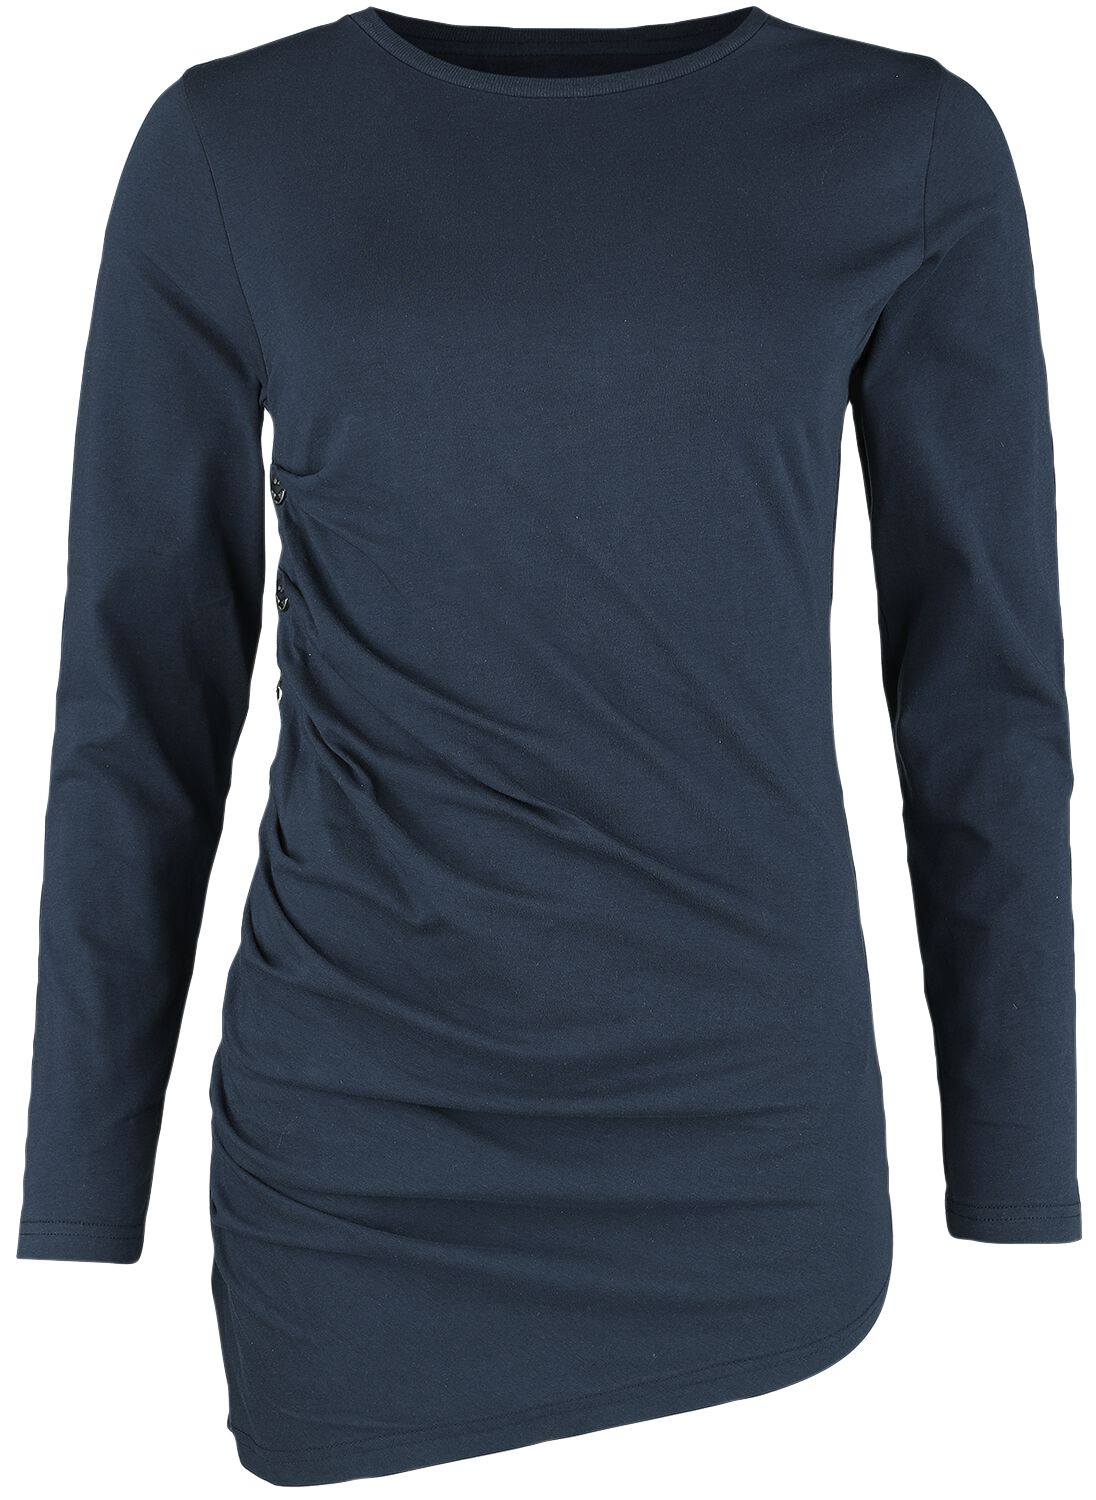 Image of Maglia Maniche Lunghe di Black Premium by EMP - Gathered long-sleeved shirt - XS a M - Donna - blu scuro